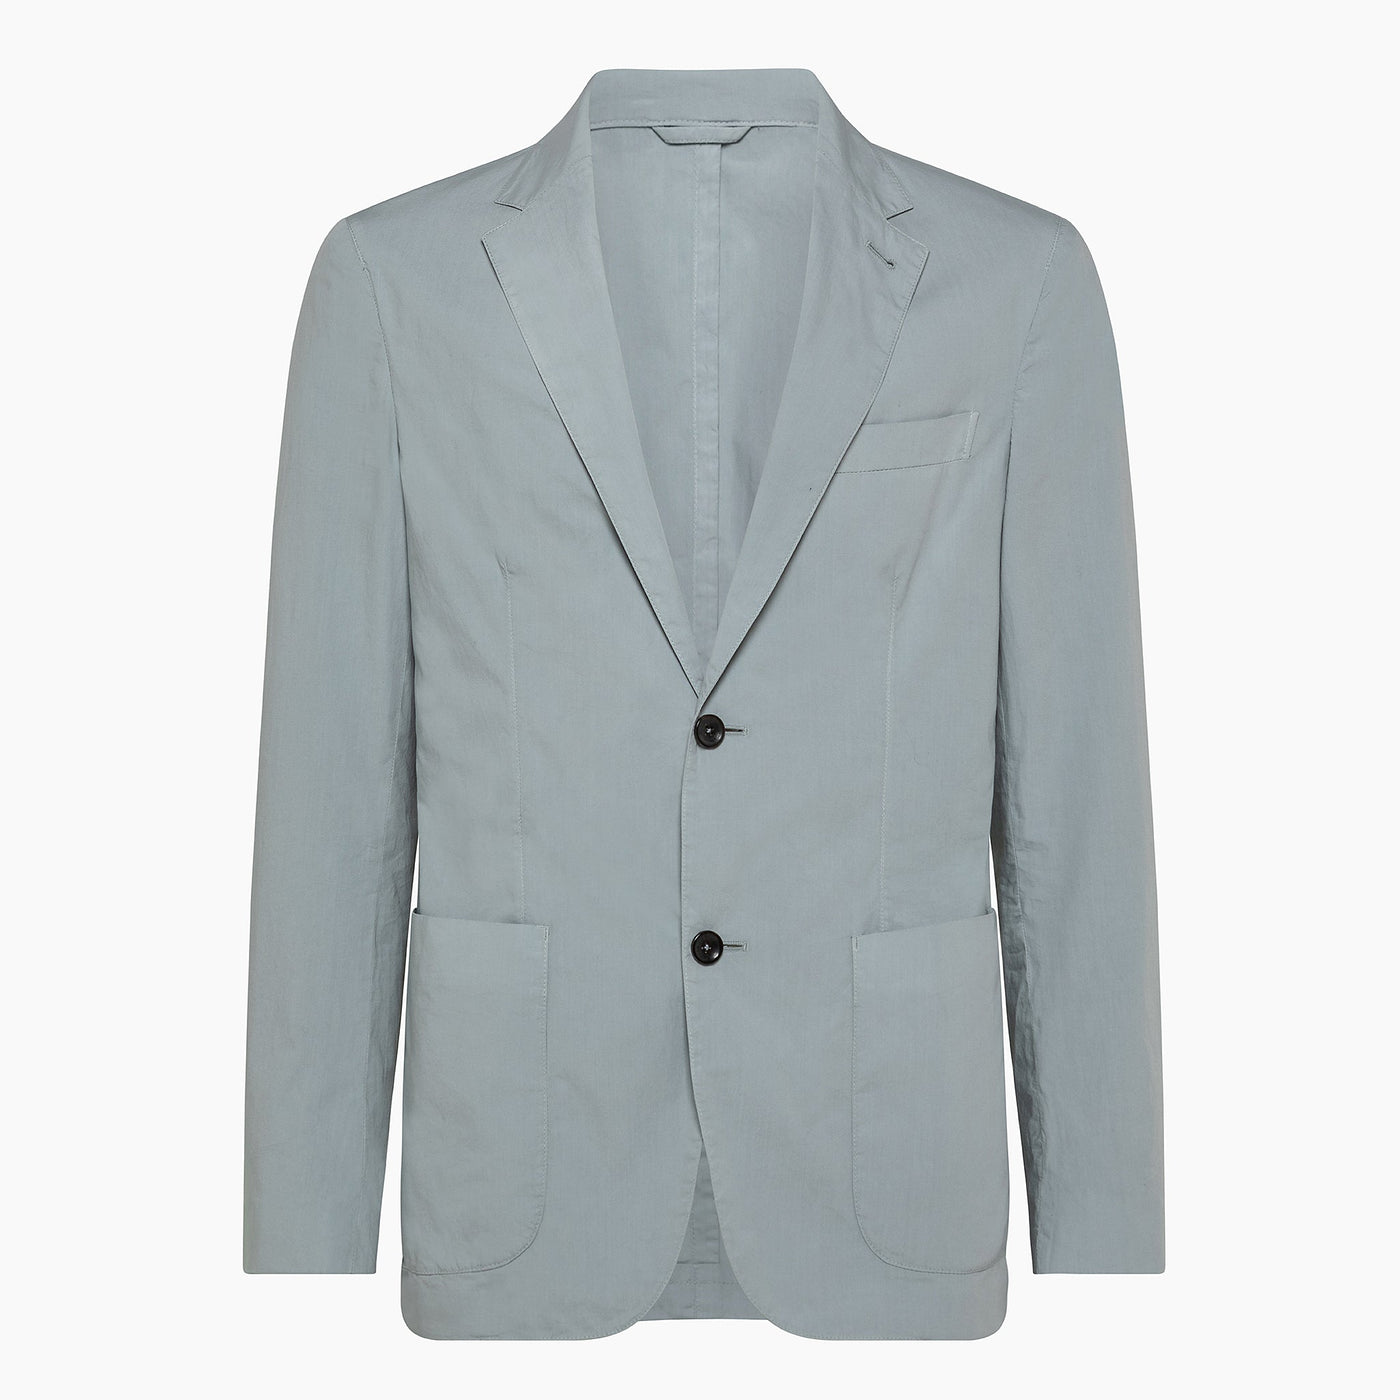 Craig deconstructed  GD cotton "Sailcloth"  blazer in shade grey